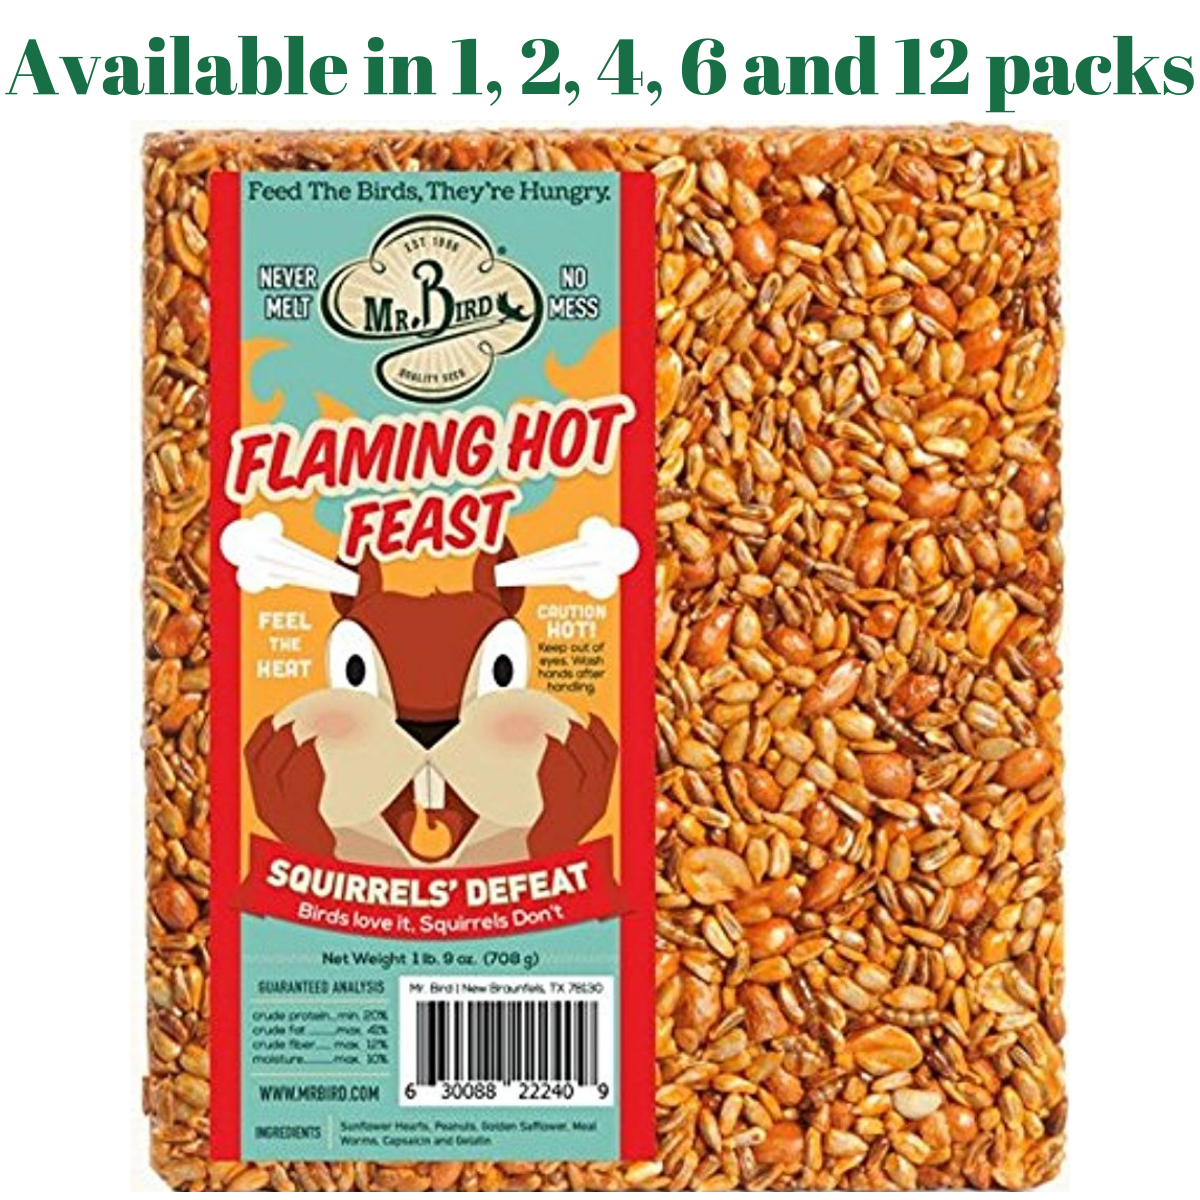 Mr. Bird's Flaming Hot Feast Large Wild Bird Seed Block 1 lb. 9 oz. (1, 2, 4, 6 and 12 Packs)